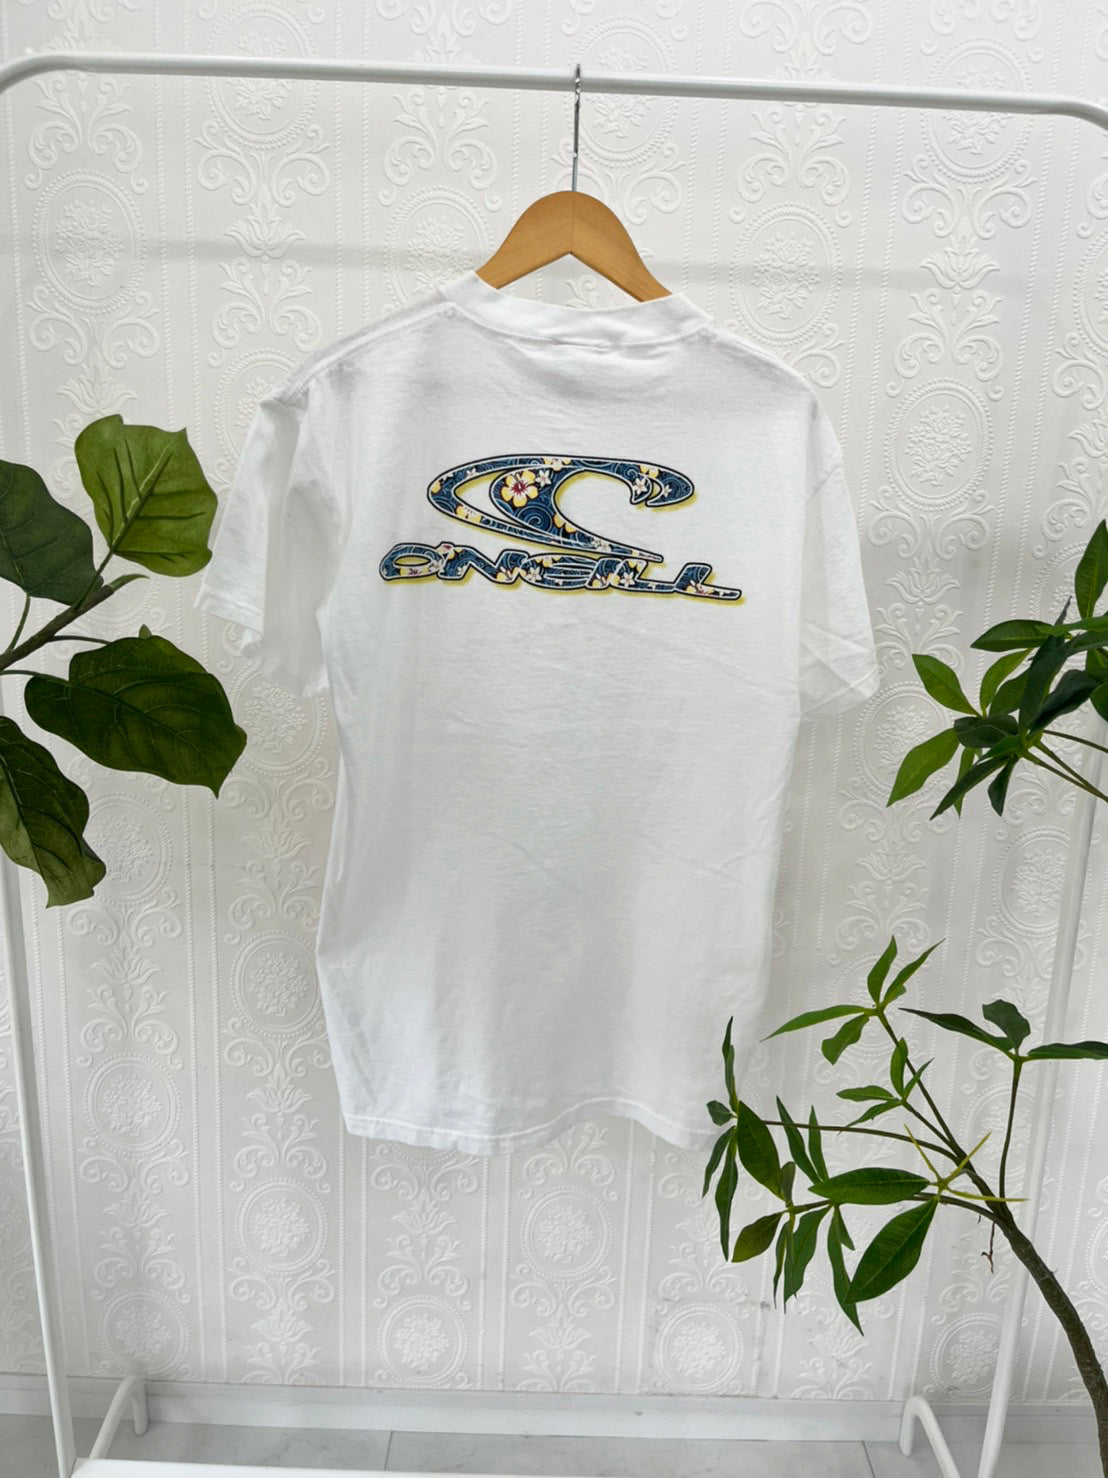 【DeadStock one wash】90's〜00's O'NEILL  Big Logo T-shirt  (men's M)